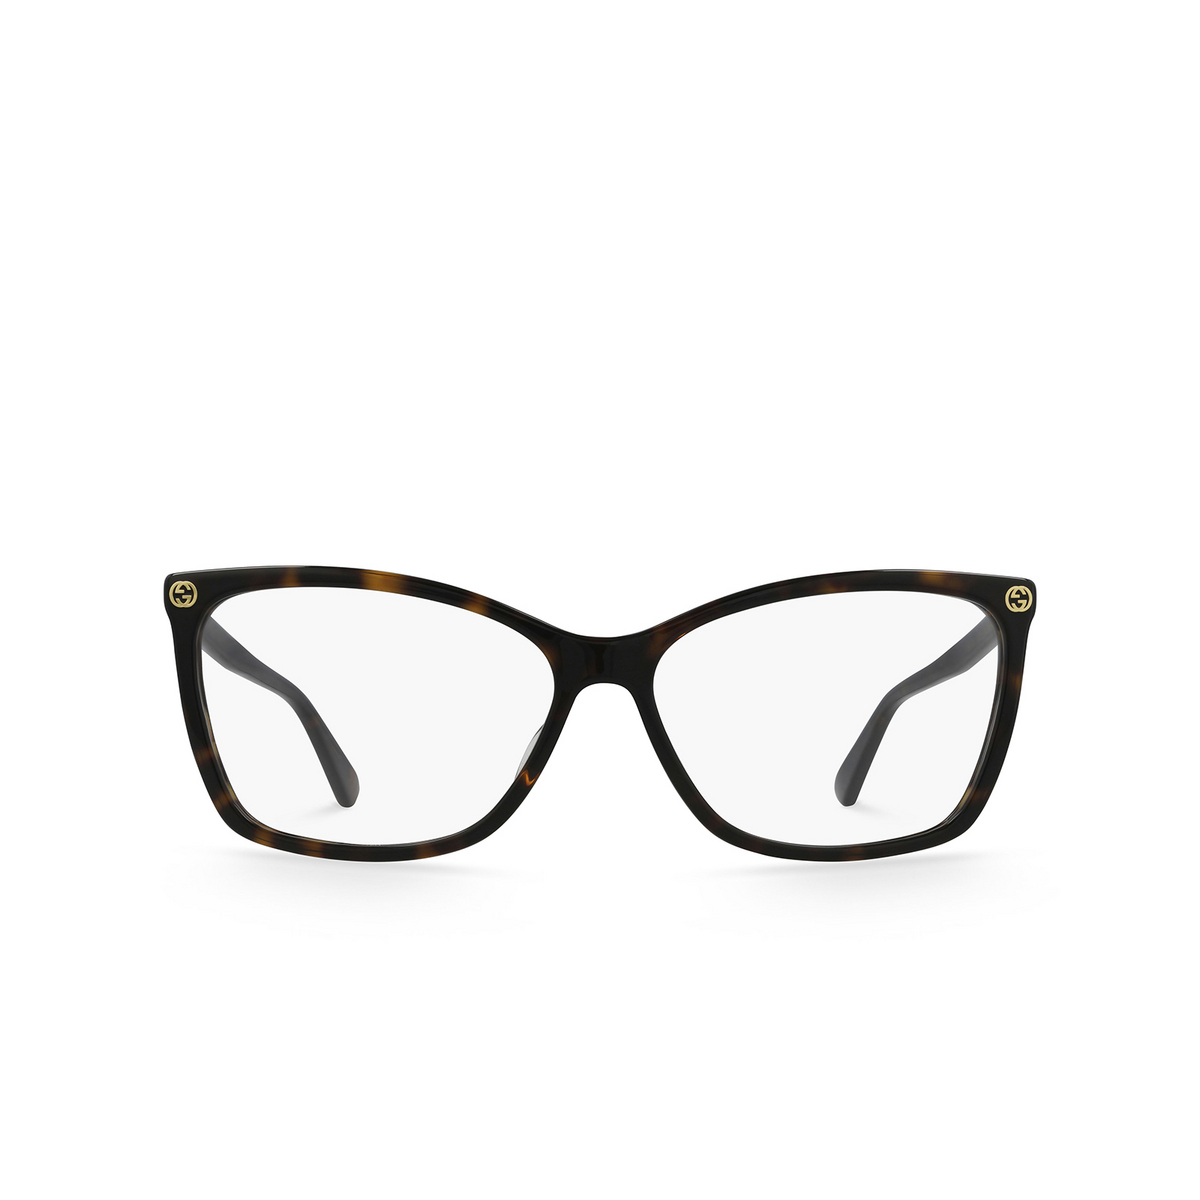 Gucci® Cat-eye Eyeglasses: GG0025O color Havana 002 - front view.